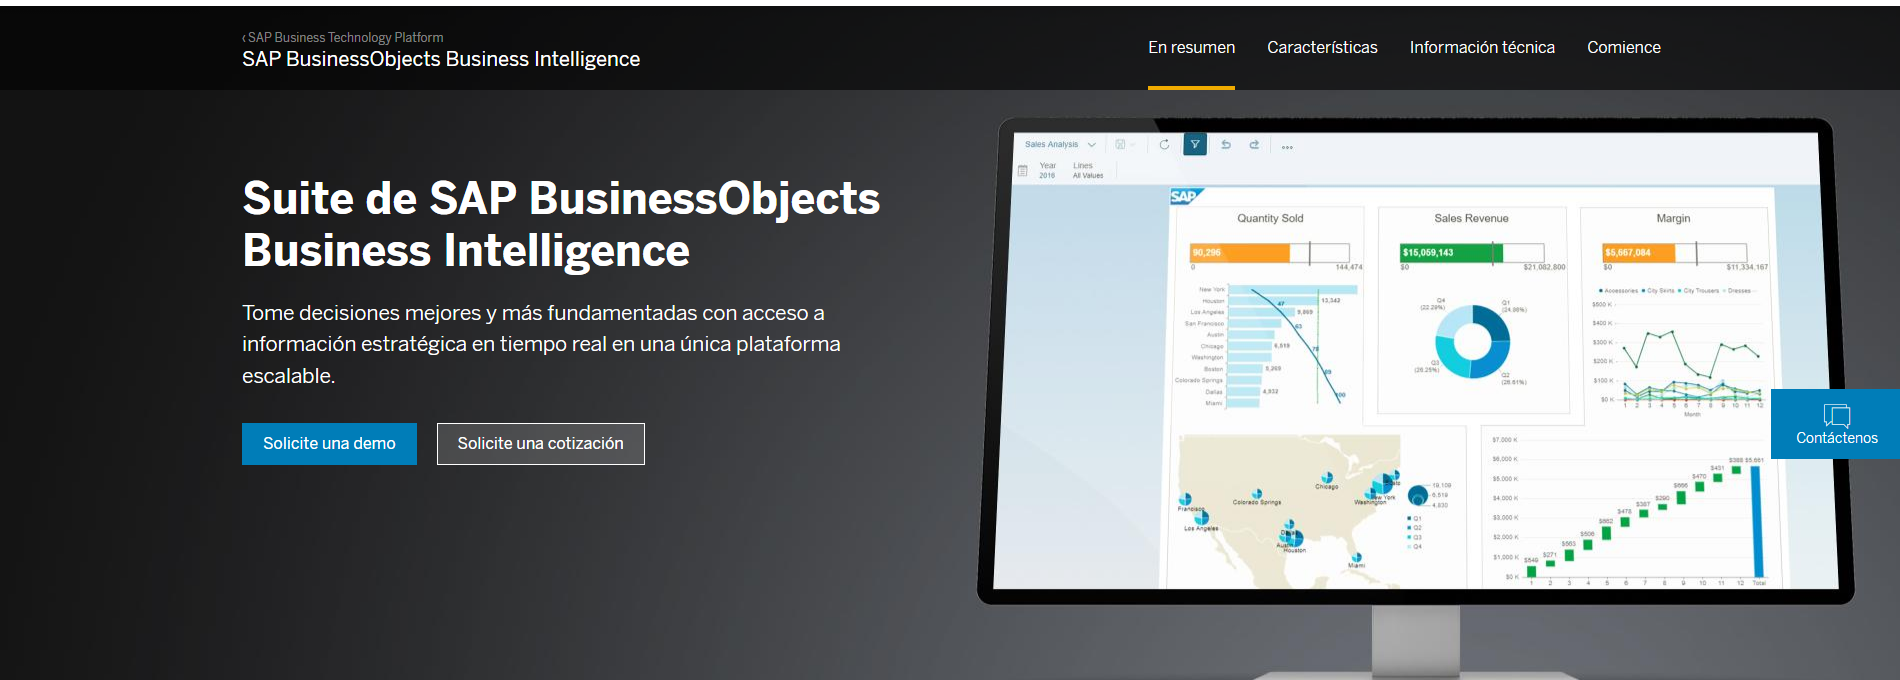 SAP Business Intelligence (BI) Análisis Integral de Datos